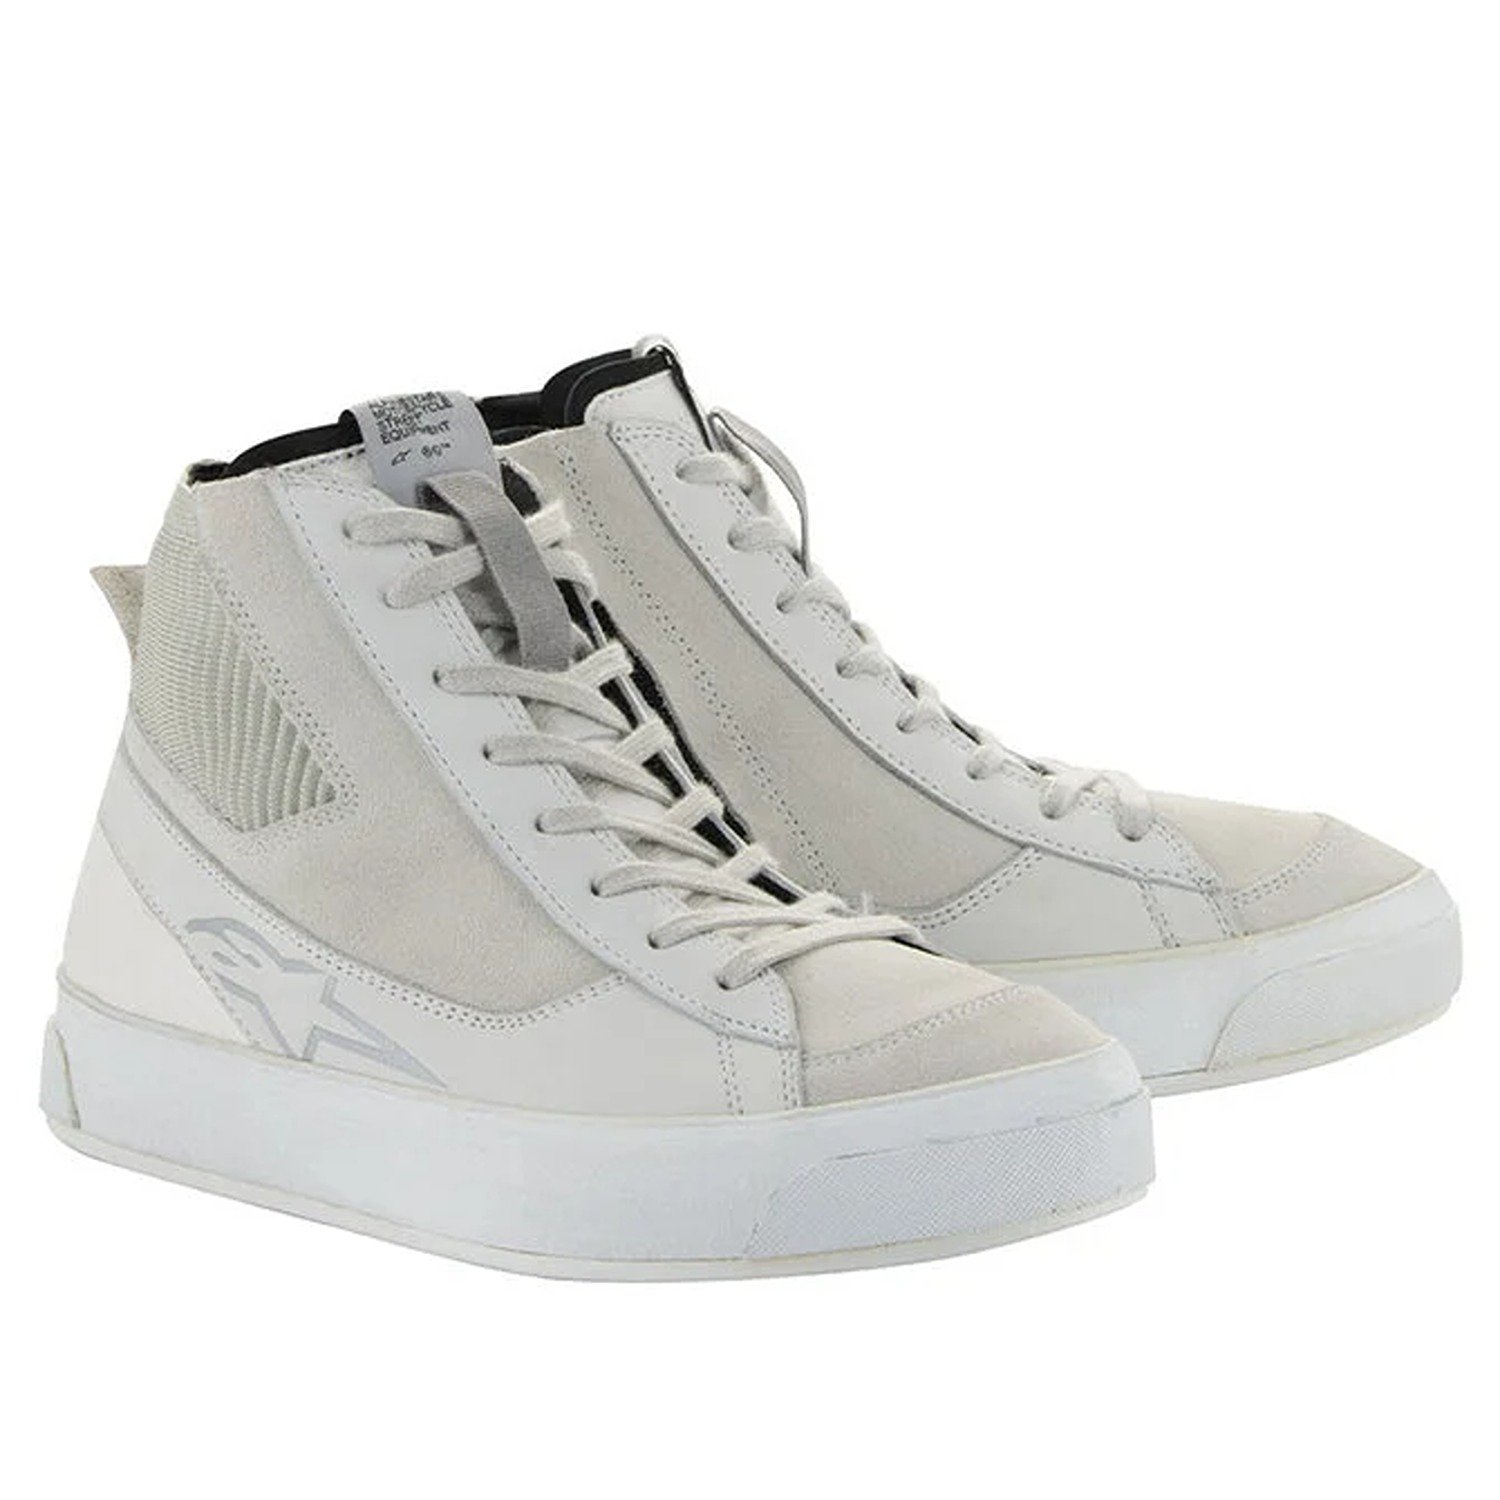 Image of EU Alpinestars Stella Stated Podium Shoes White Cool Gray Taille US 85